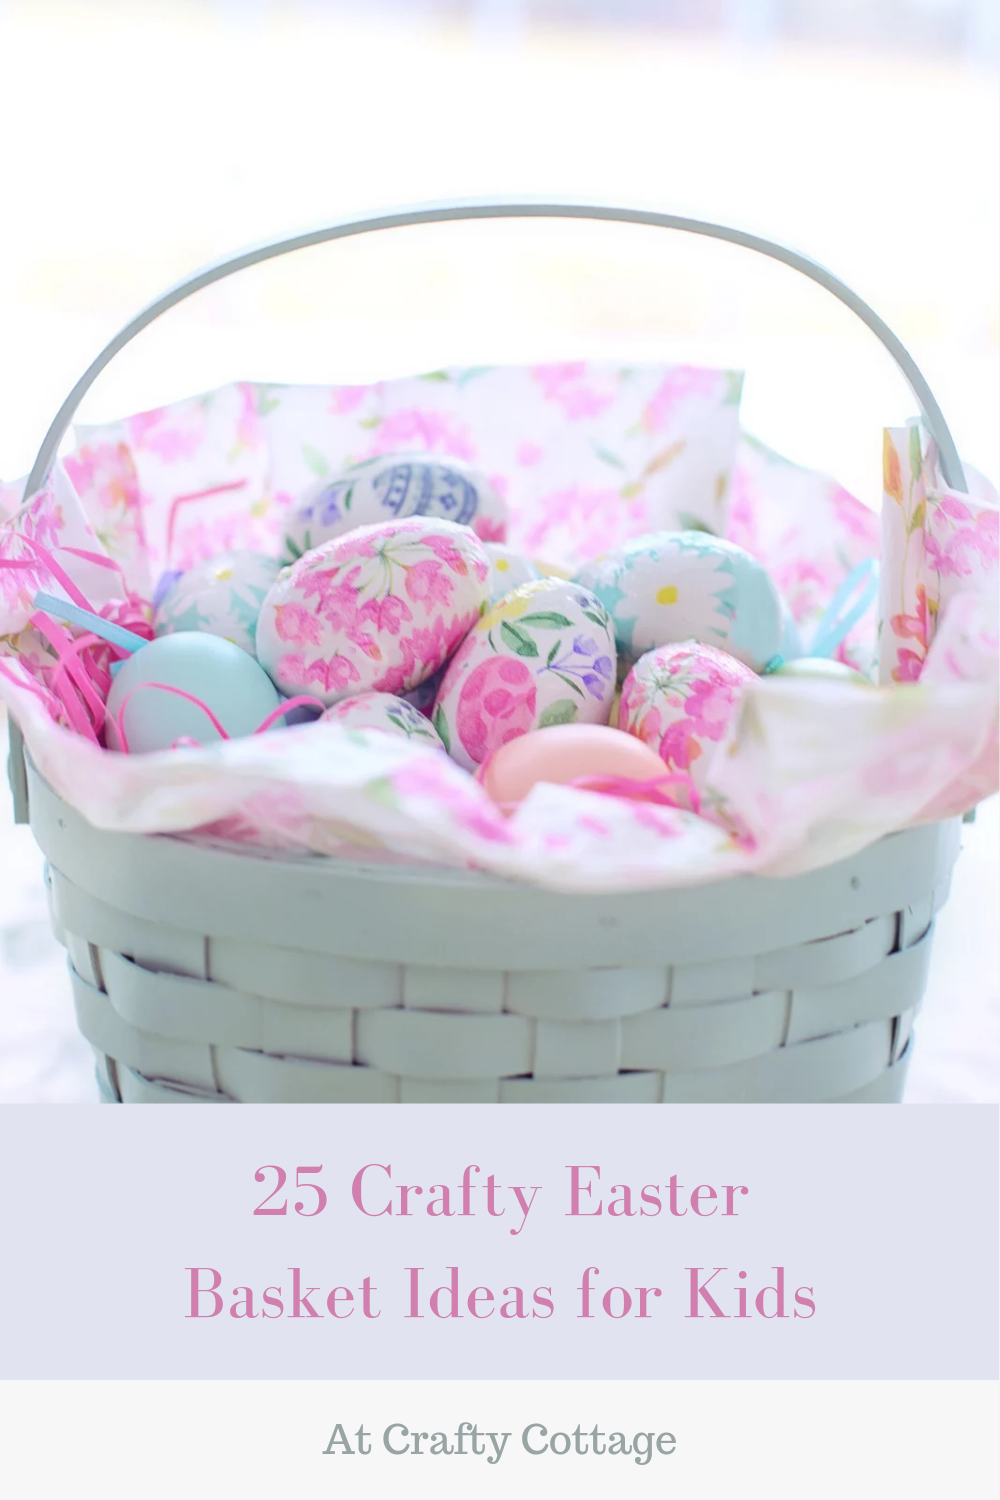 25 Crafty Easter Basket Ideas for Kids